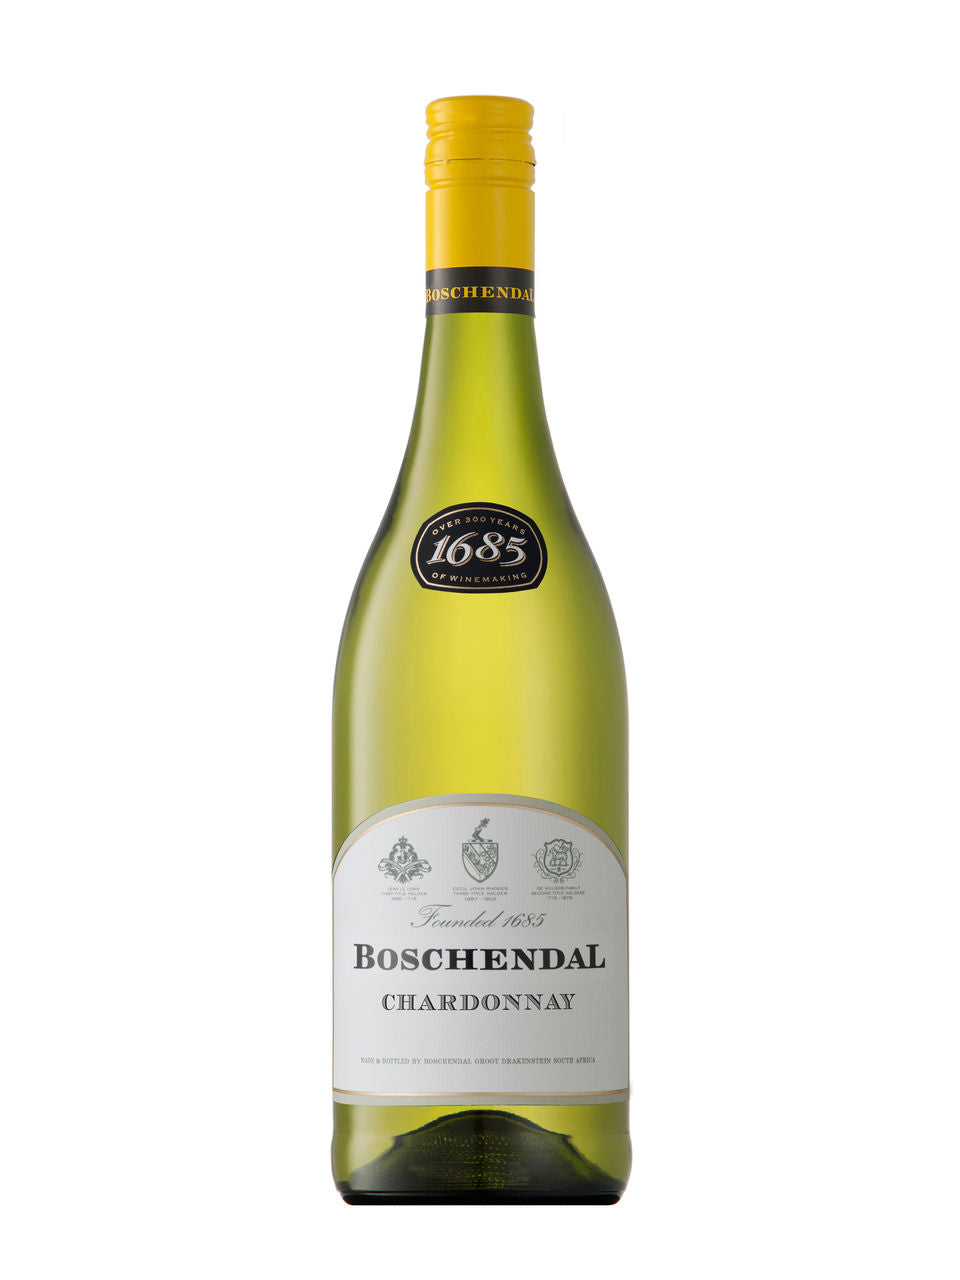 Boschendal 1685 Chardonnay Chardonnay  750 mL bottle VINTAGES